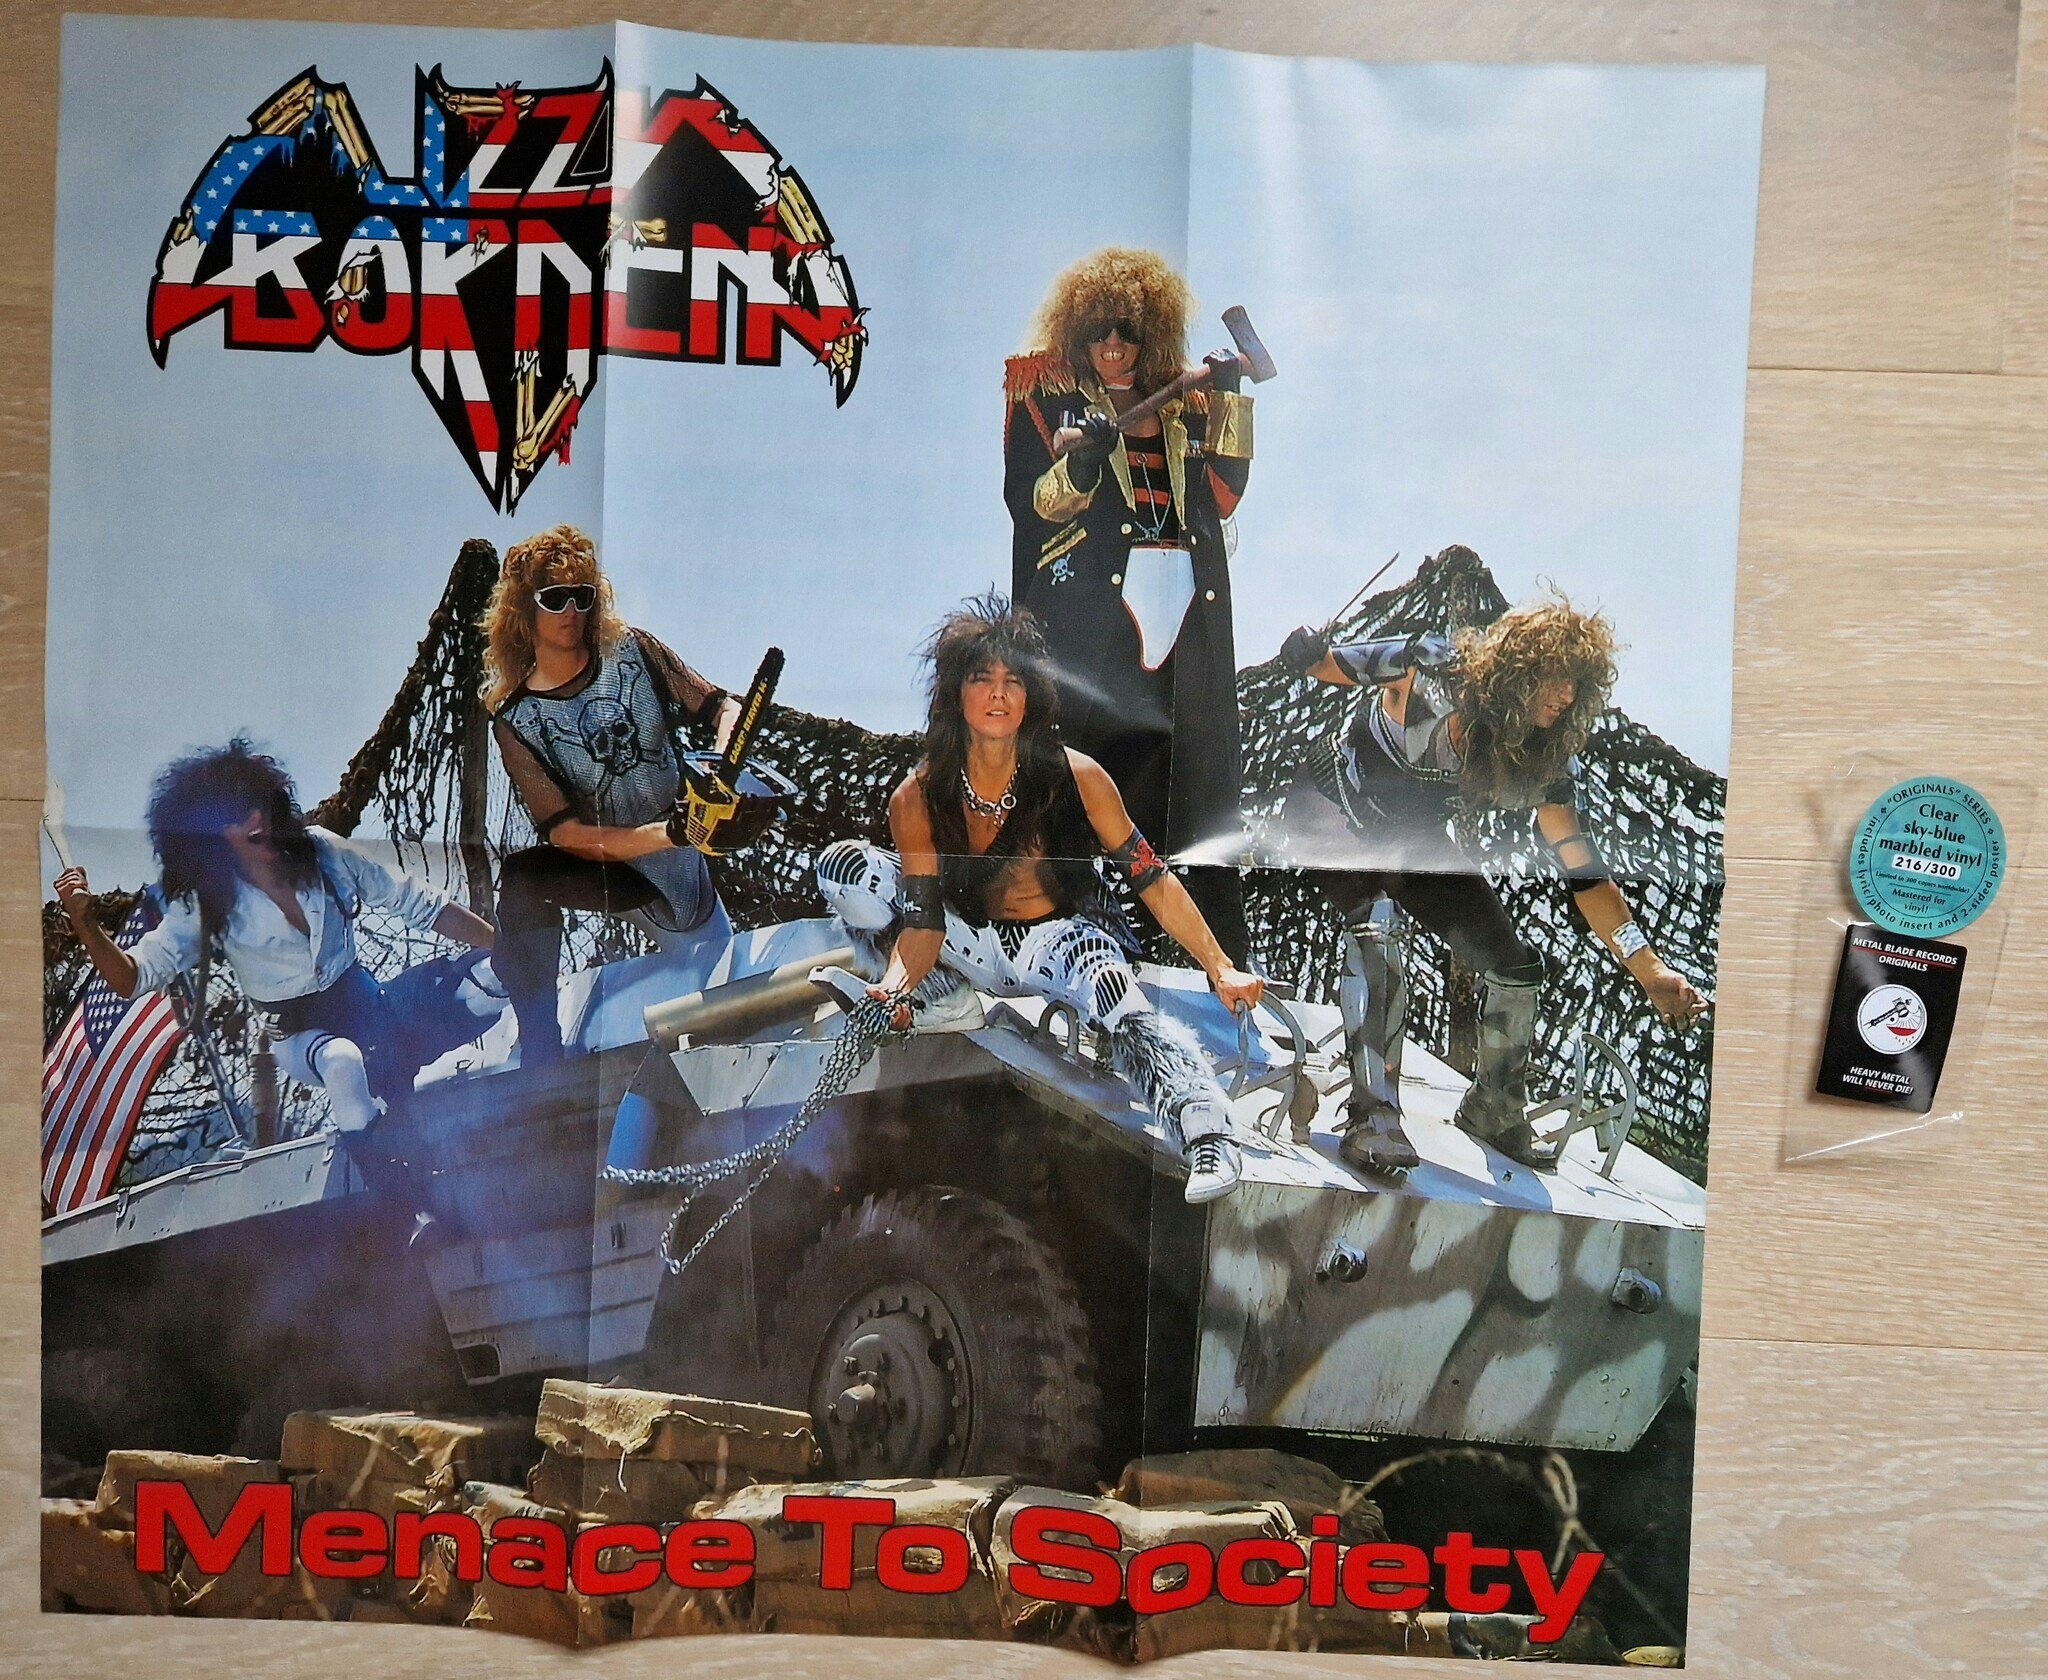 Lizzy Borden, Menace to society. Vinyl LP